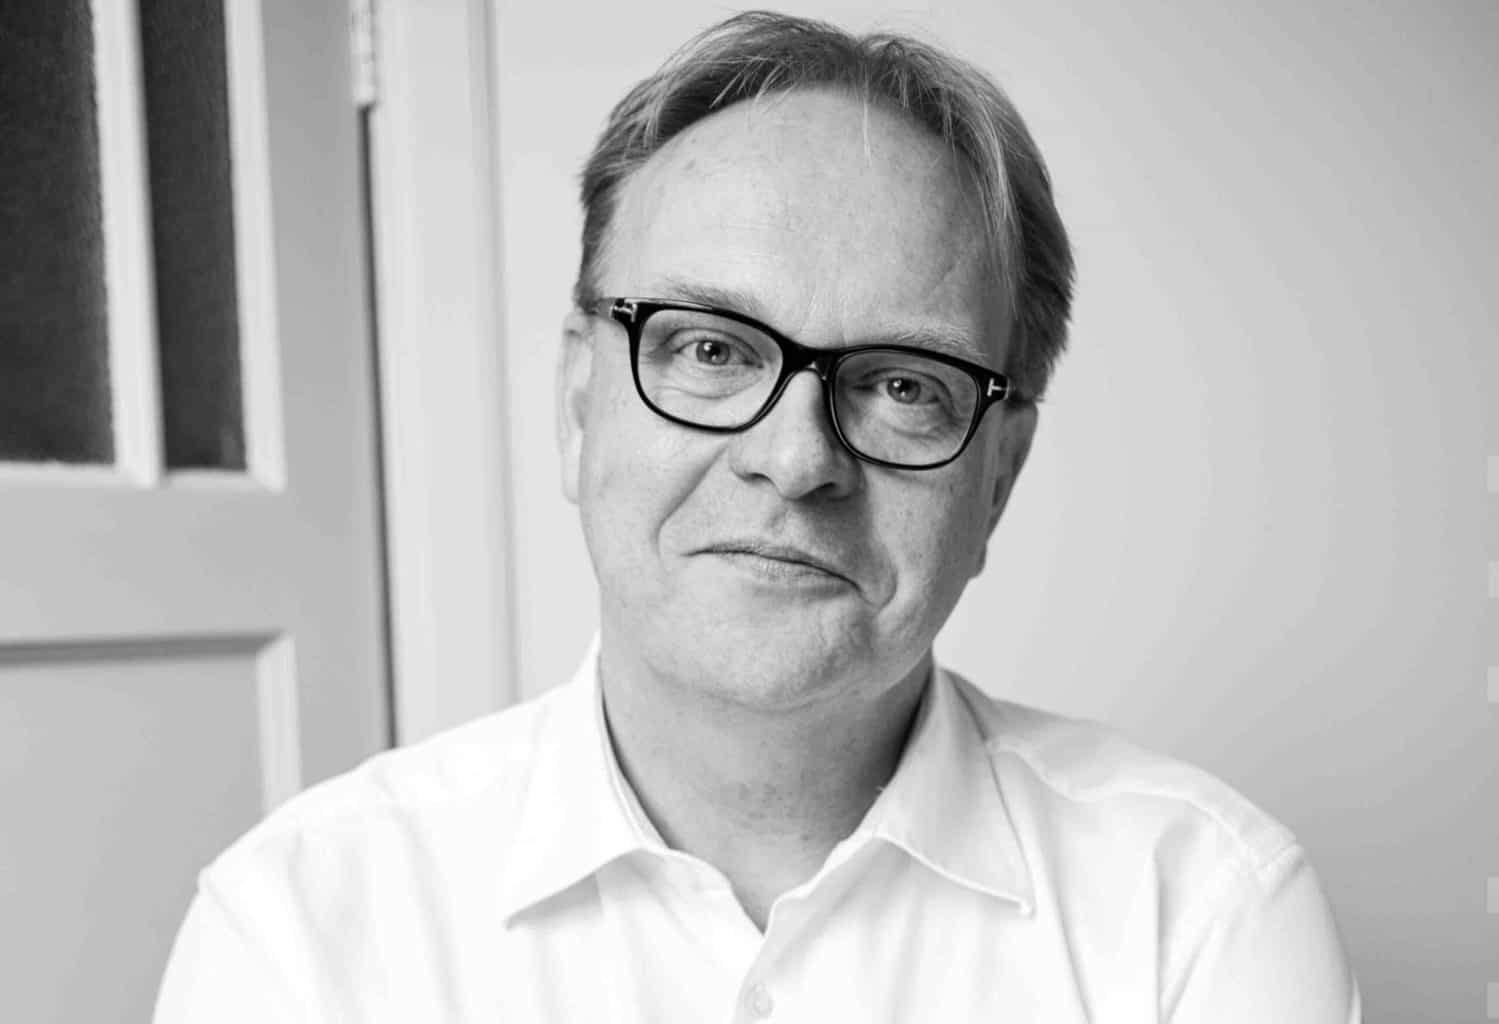 Presidente da VAN Kansspelen, Frits Huffnagel, deixa o cargo